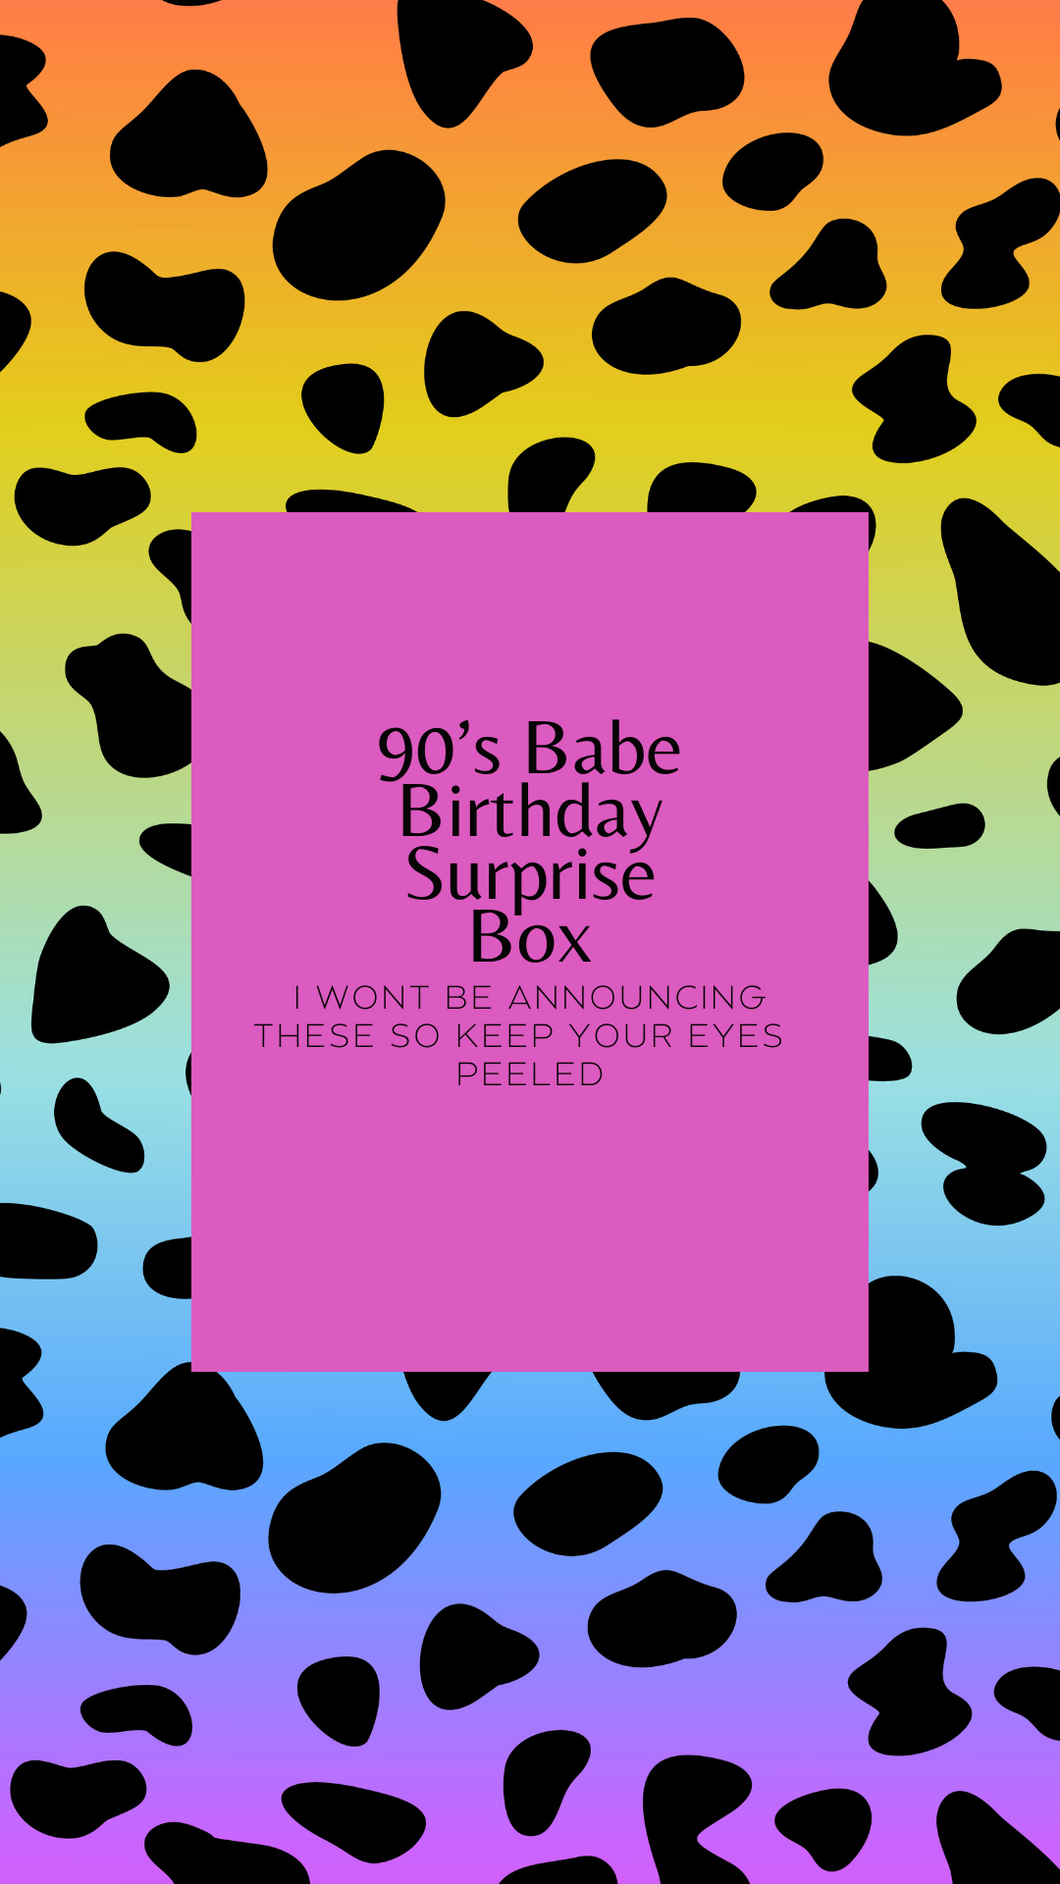 90's Babe Birthday Surprise Box